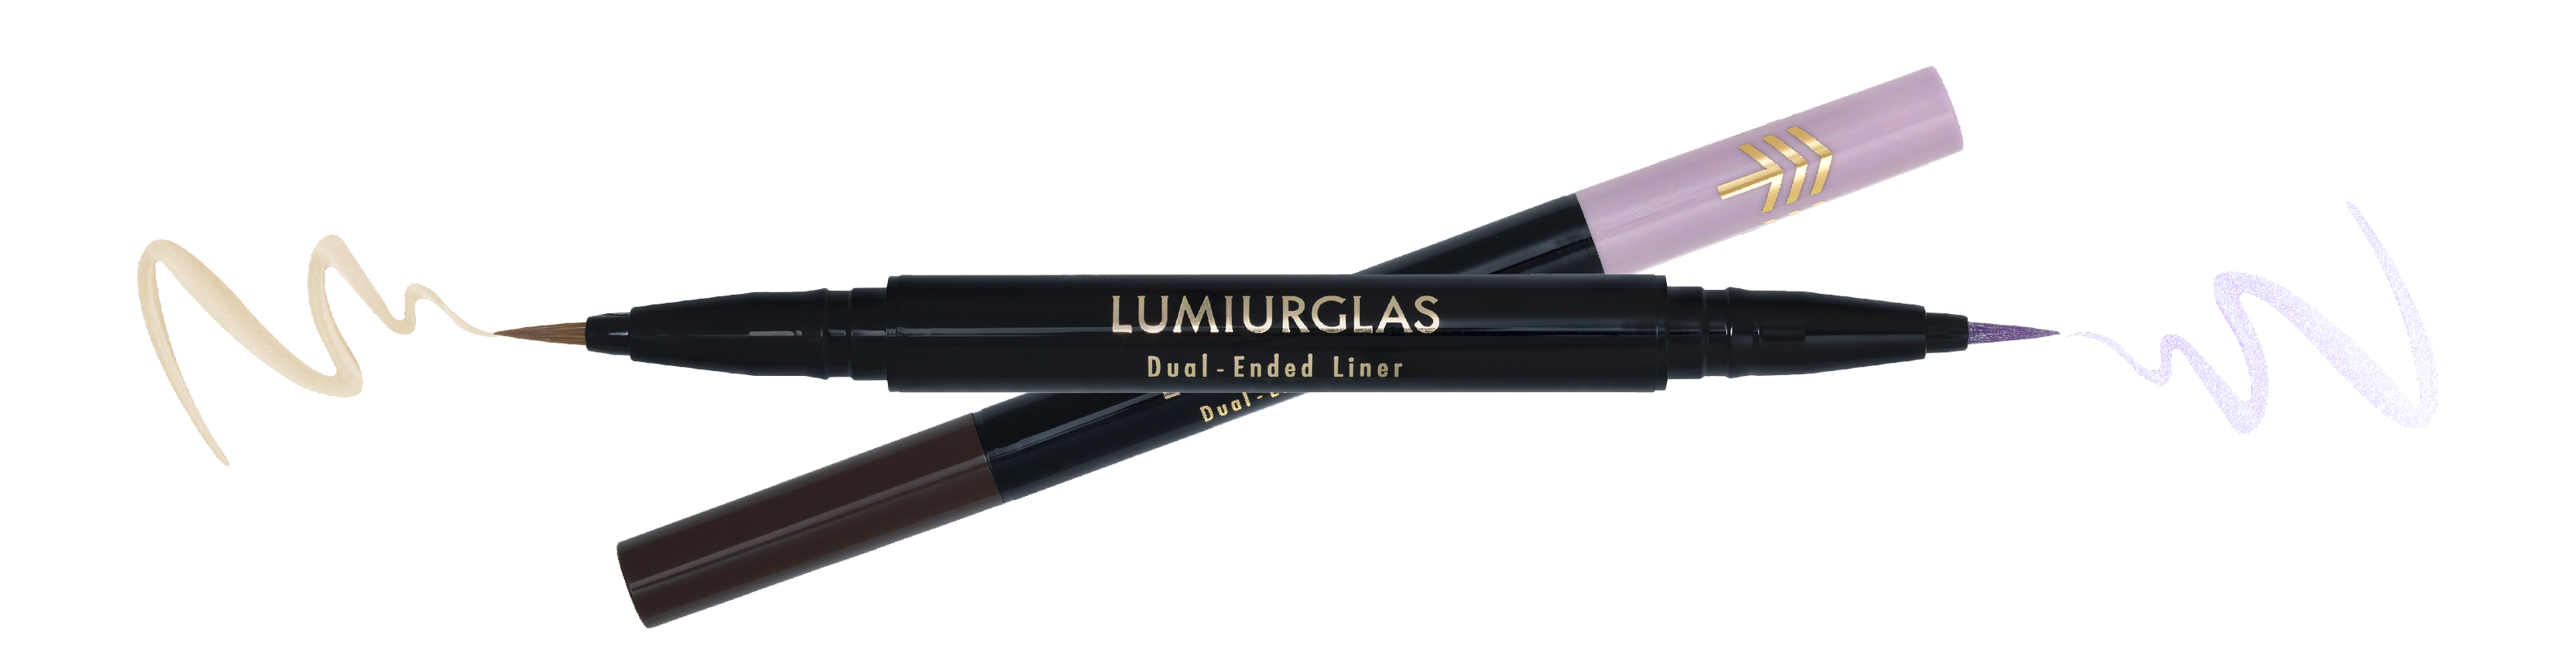 LUMIURGLAS Dual-Ended Liner